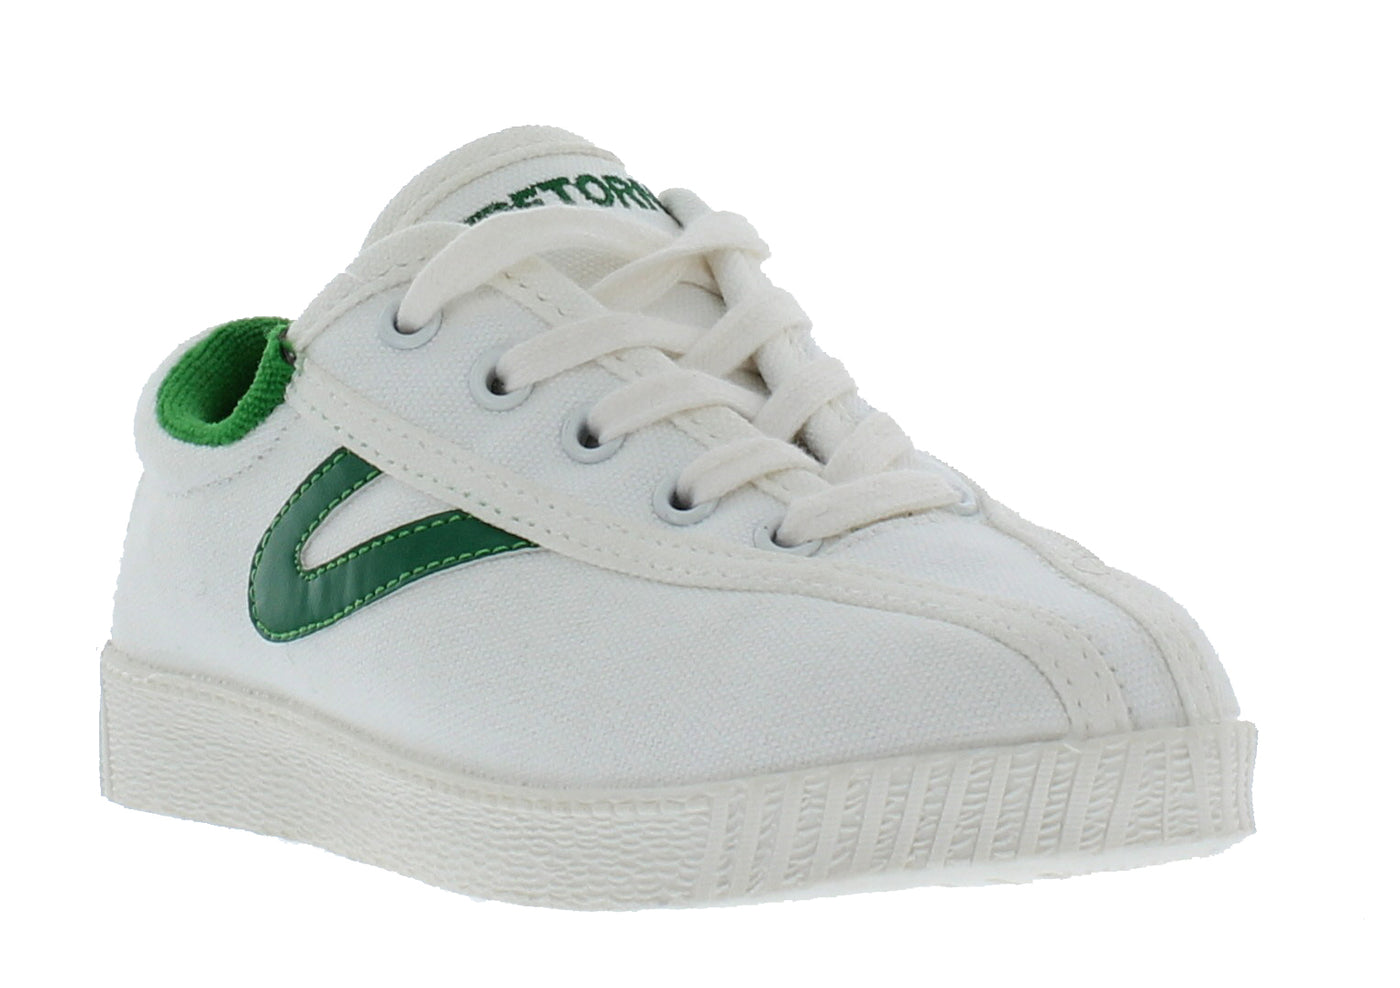 Tretorn Children's Canvas Sneakers Green